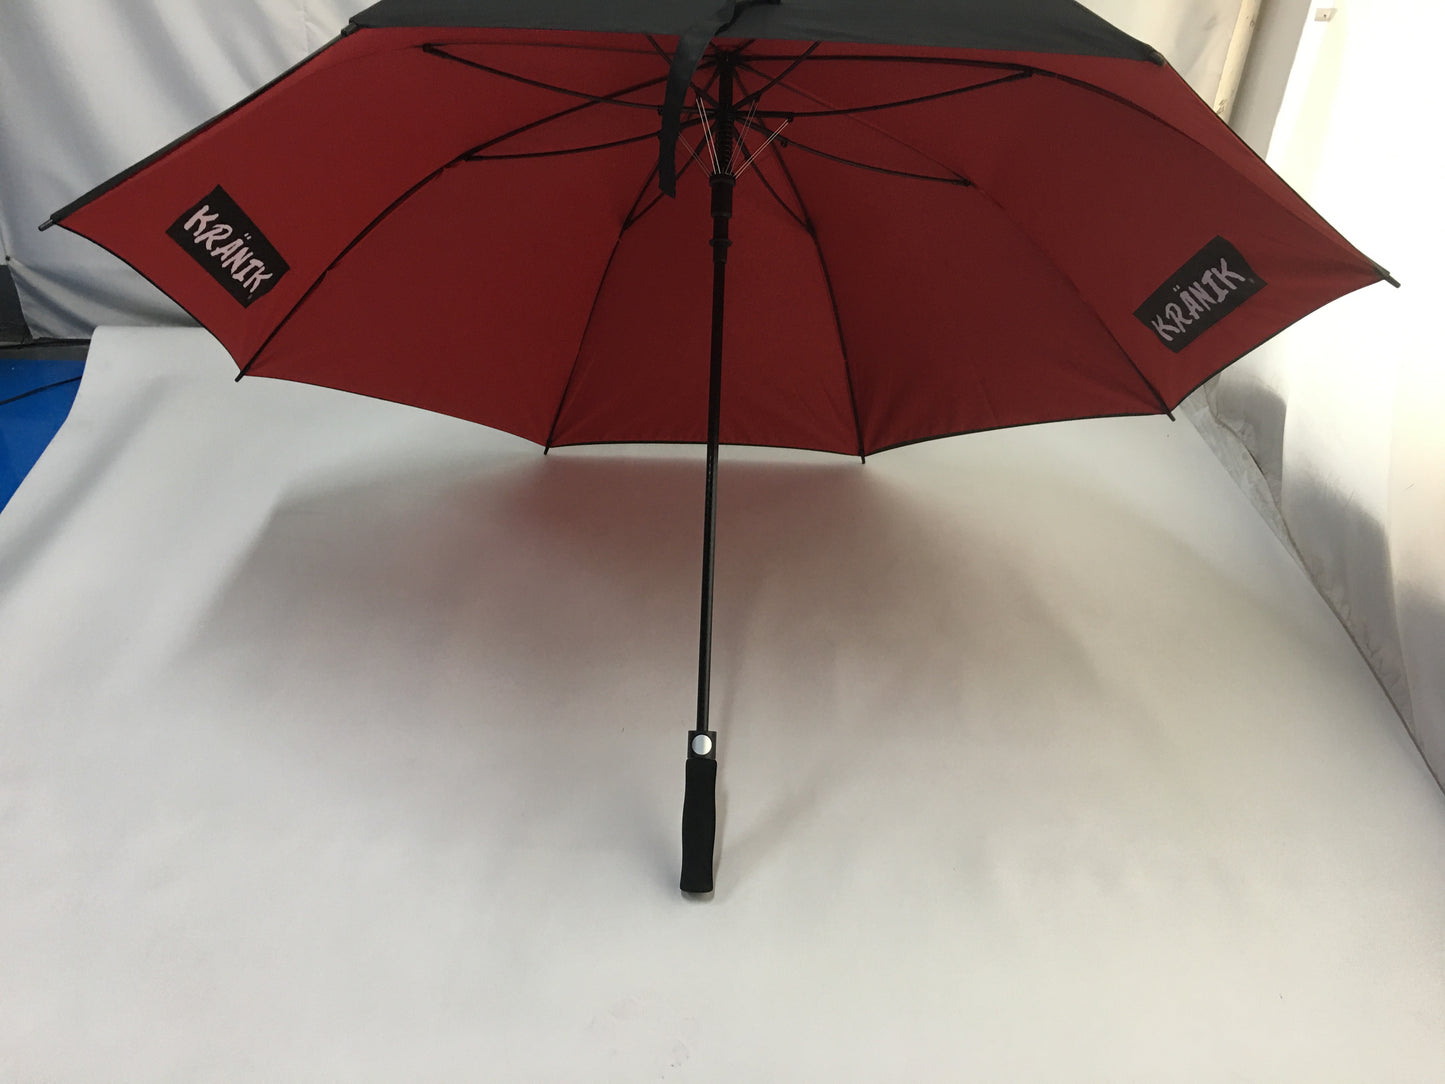 Kranik Brand Umbrella 60"